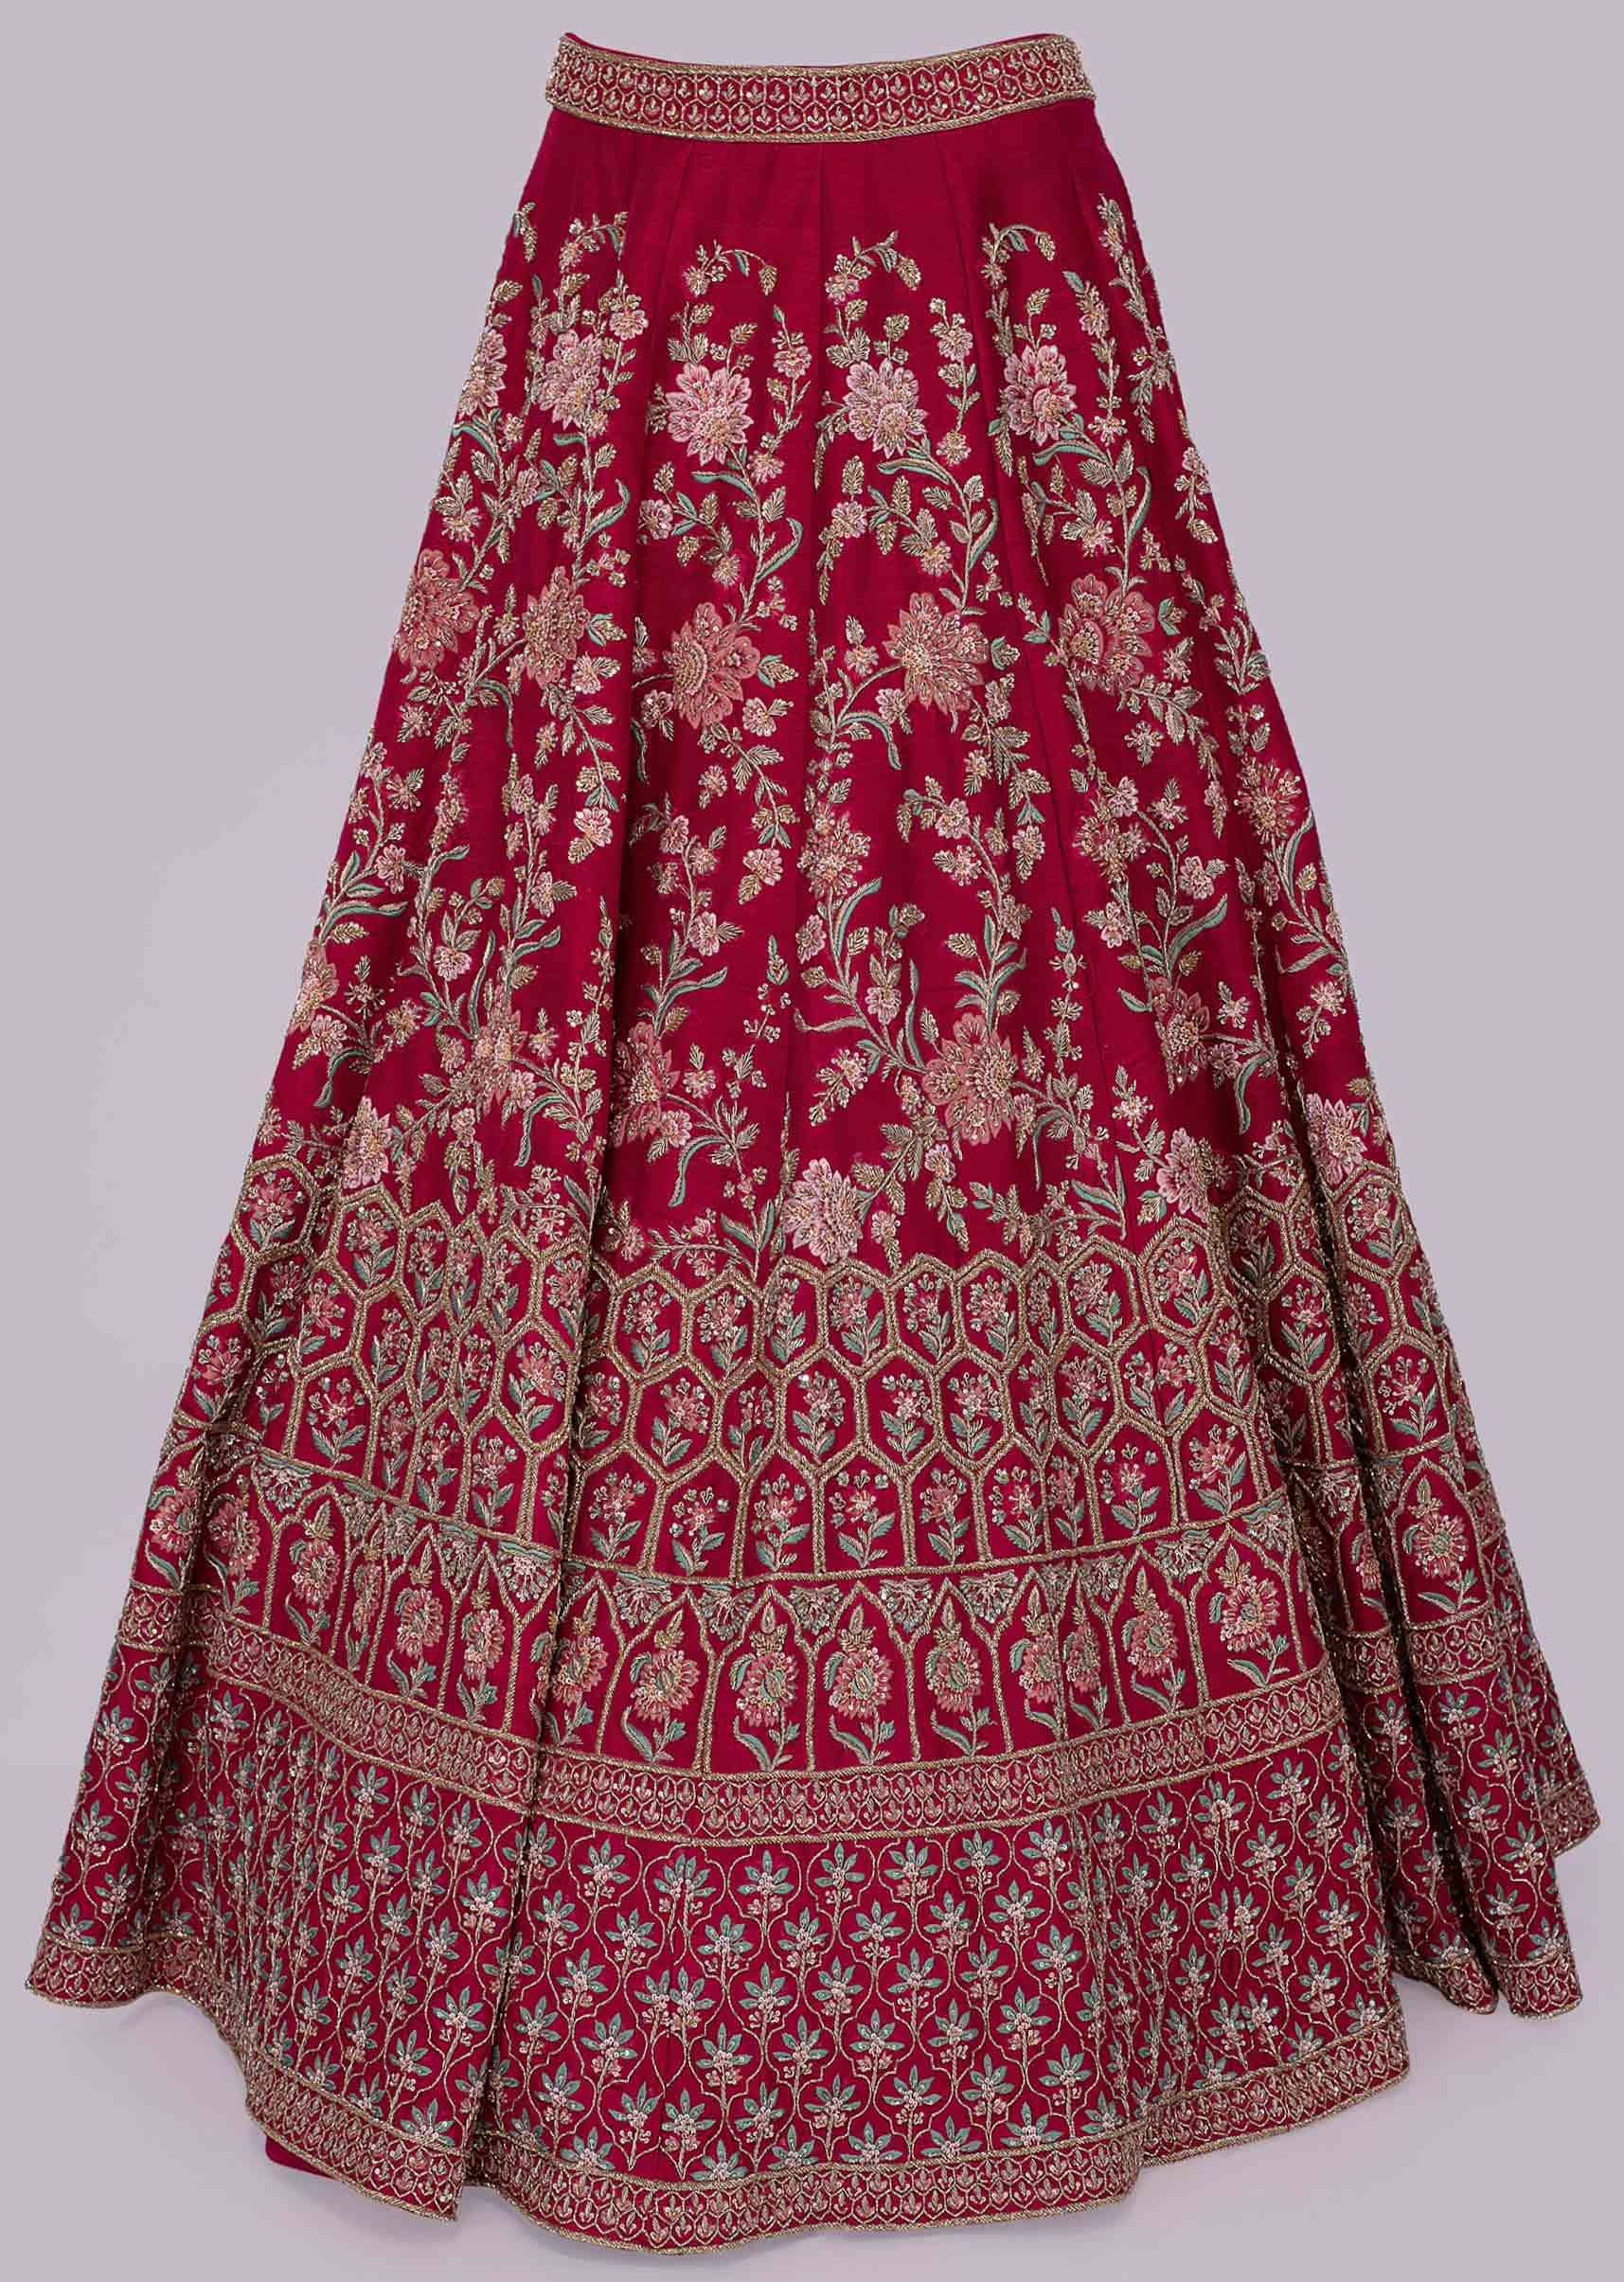 Disha Patani in Kalki mesmerising pink raw silk lehenga set in multi color resham, ari and zardosi embroidery.